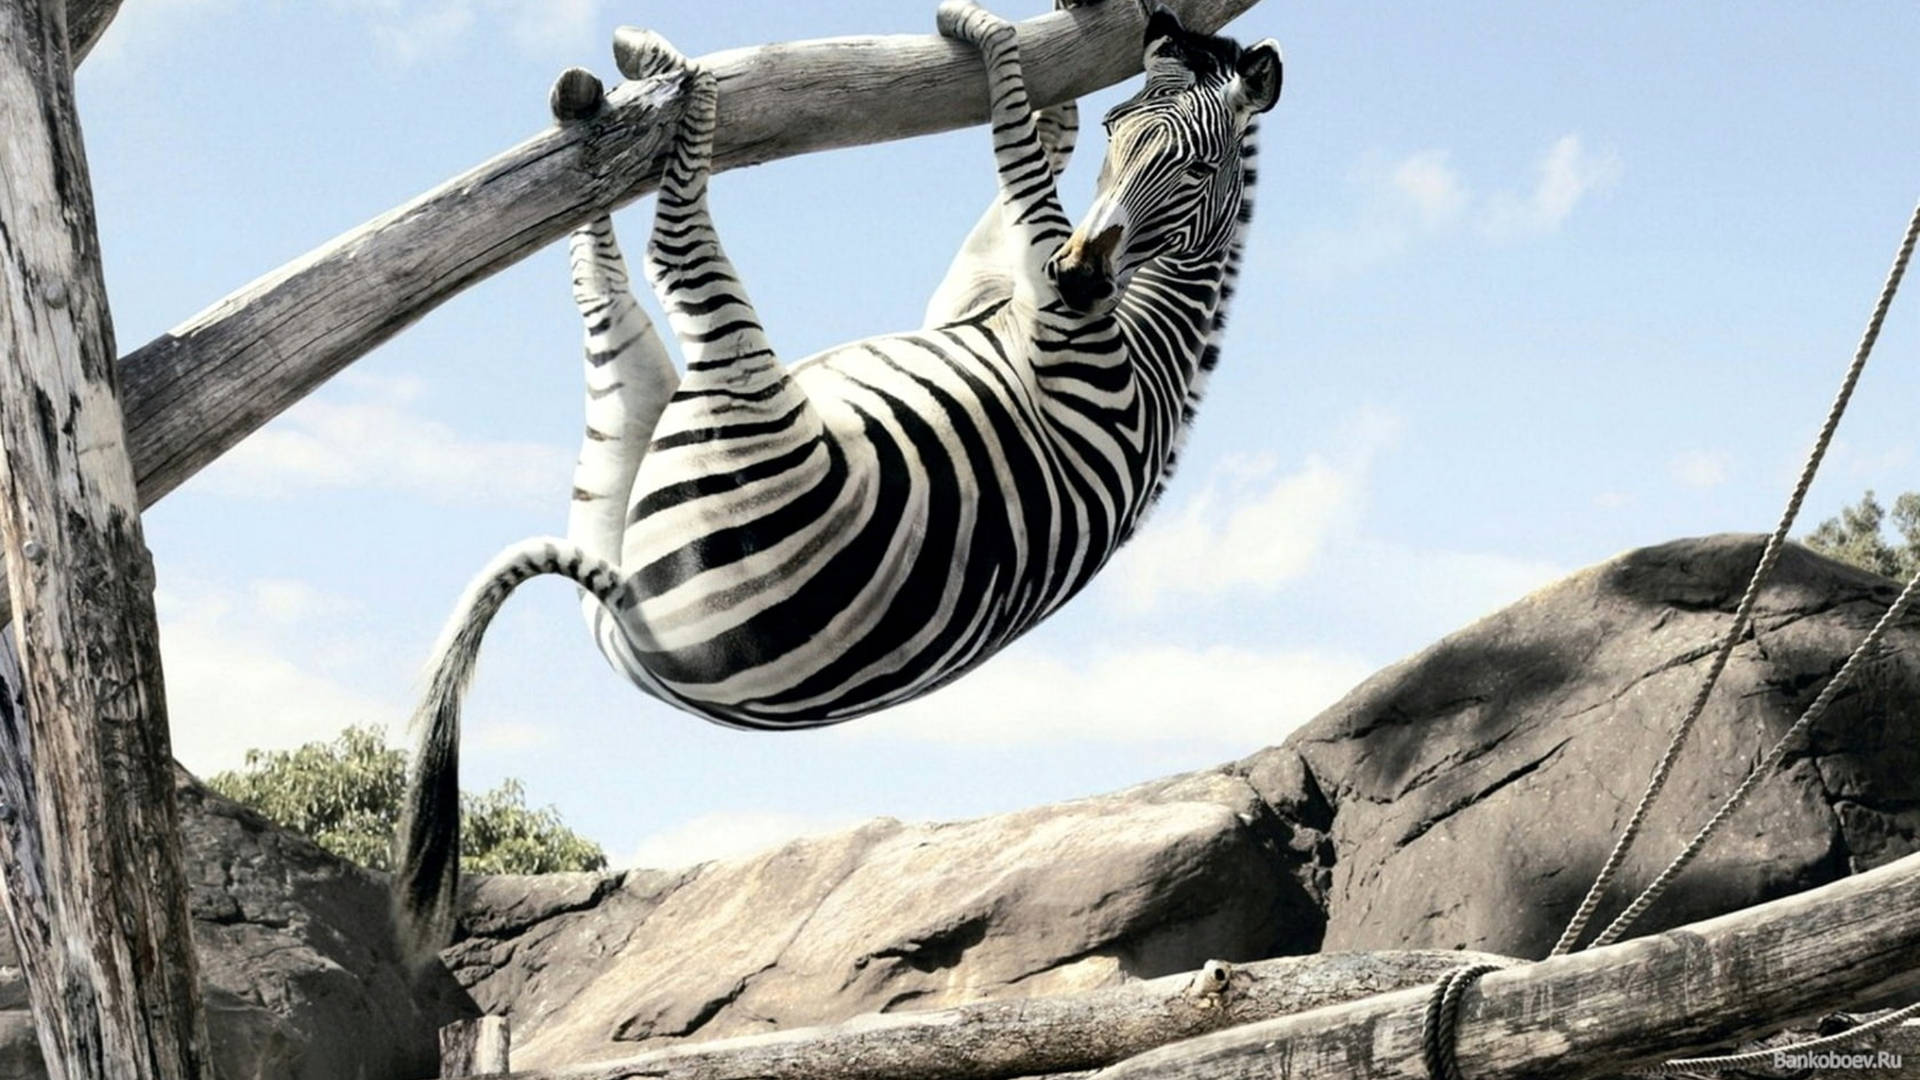 Zebra Hanging On Tree